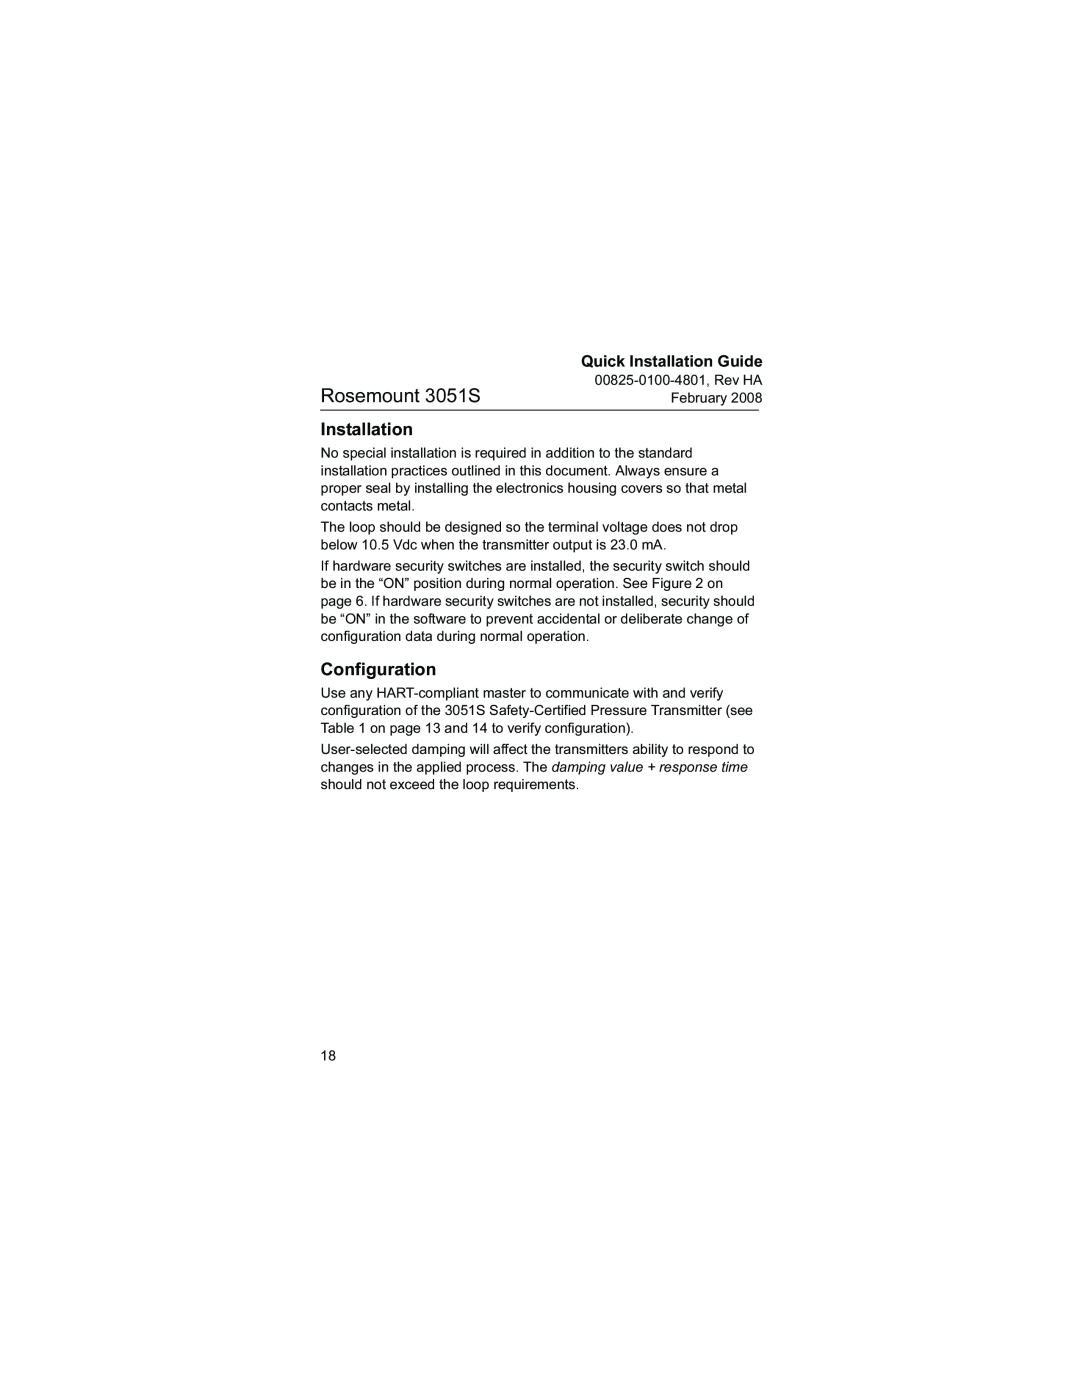 Emerson manual Configuration, Rosemount 3051S, Quick Installation Guide 